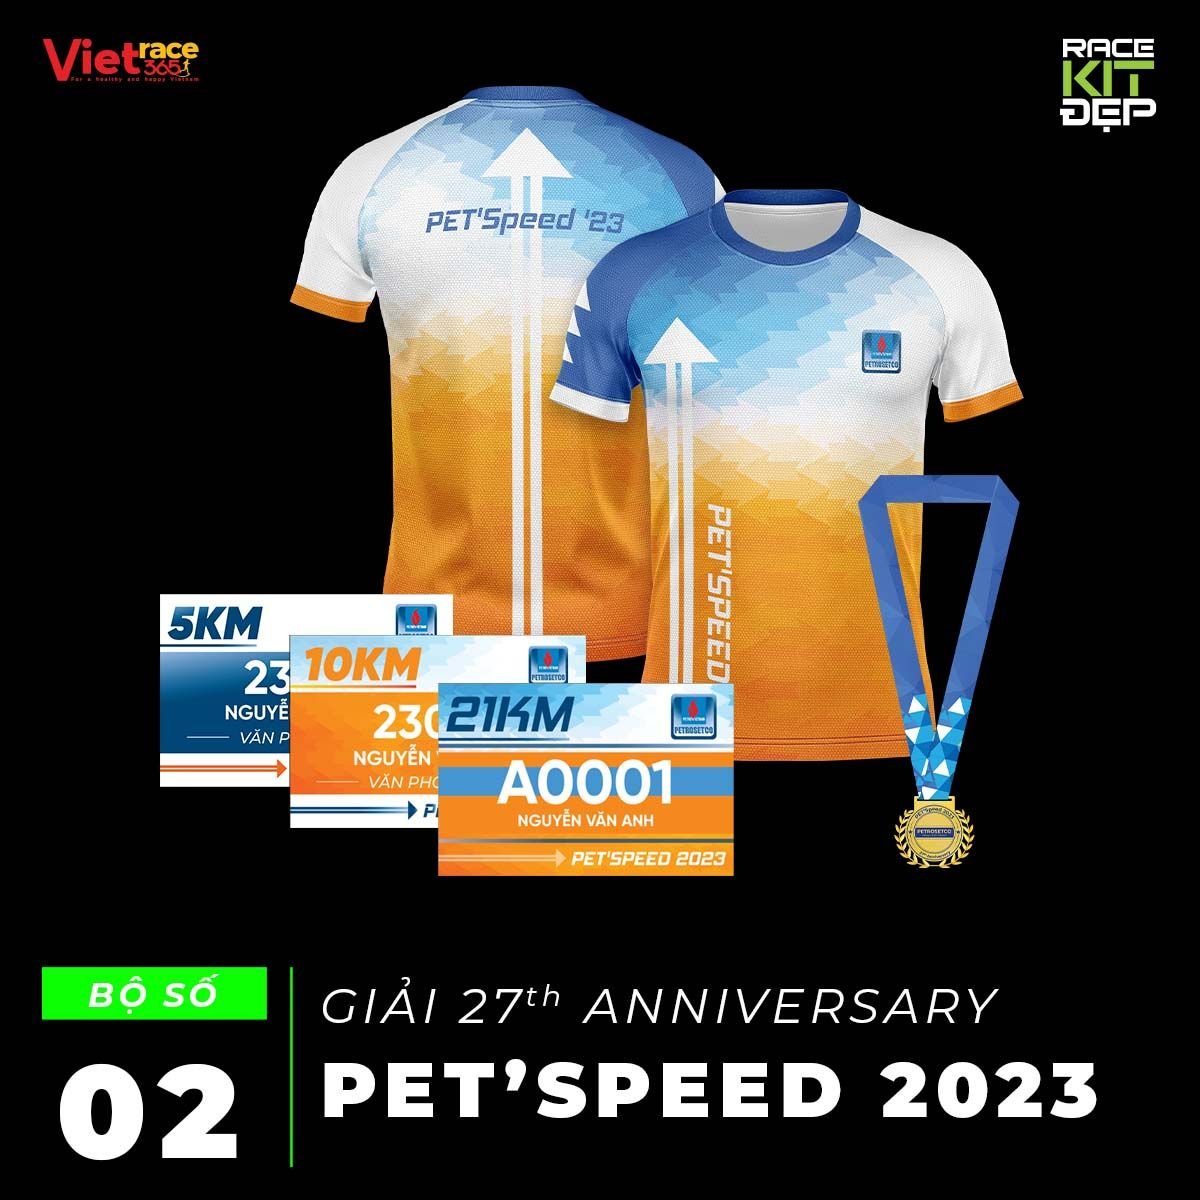 Pet'speed 2023